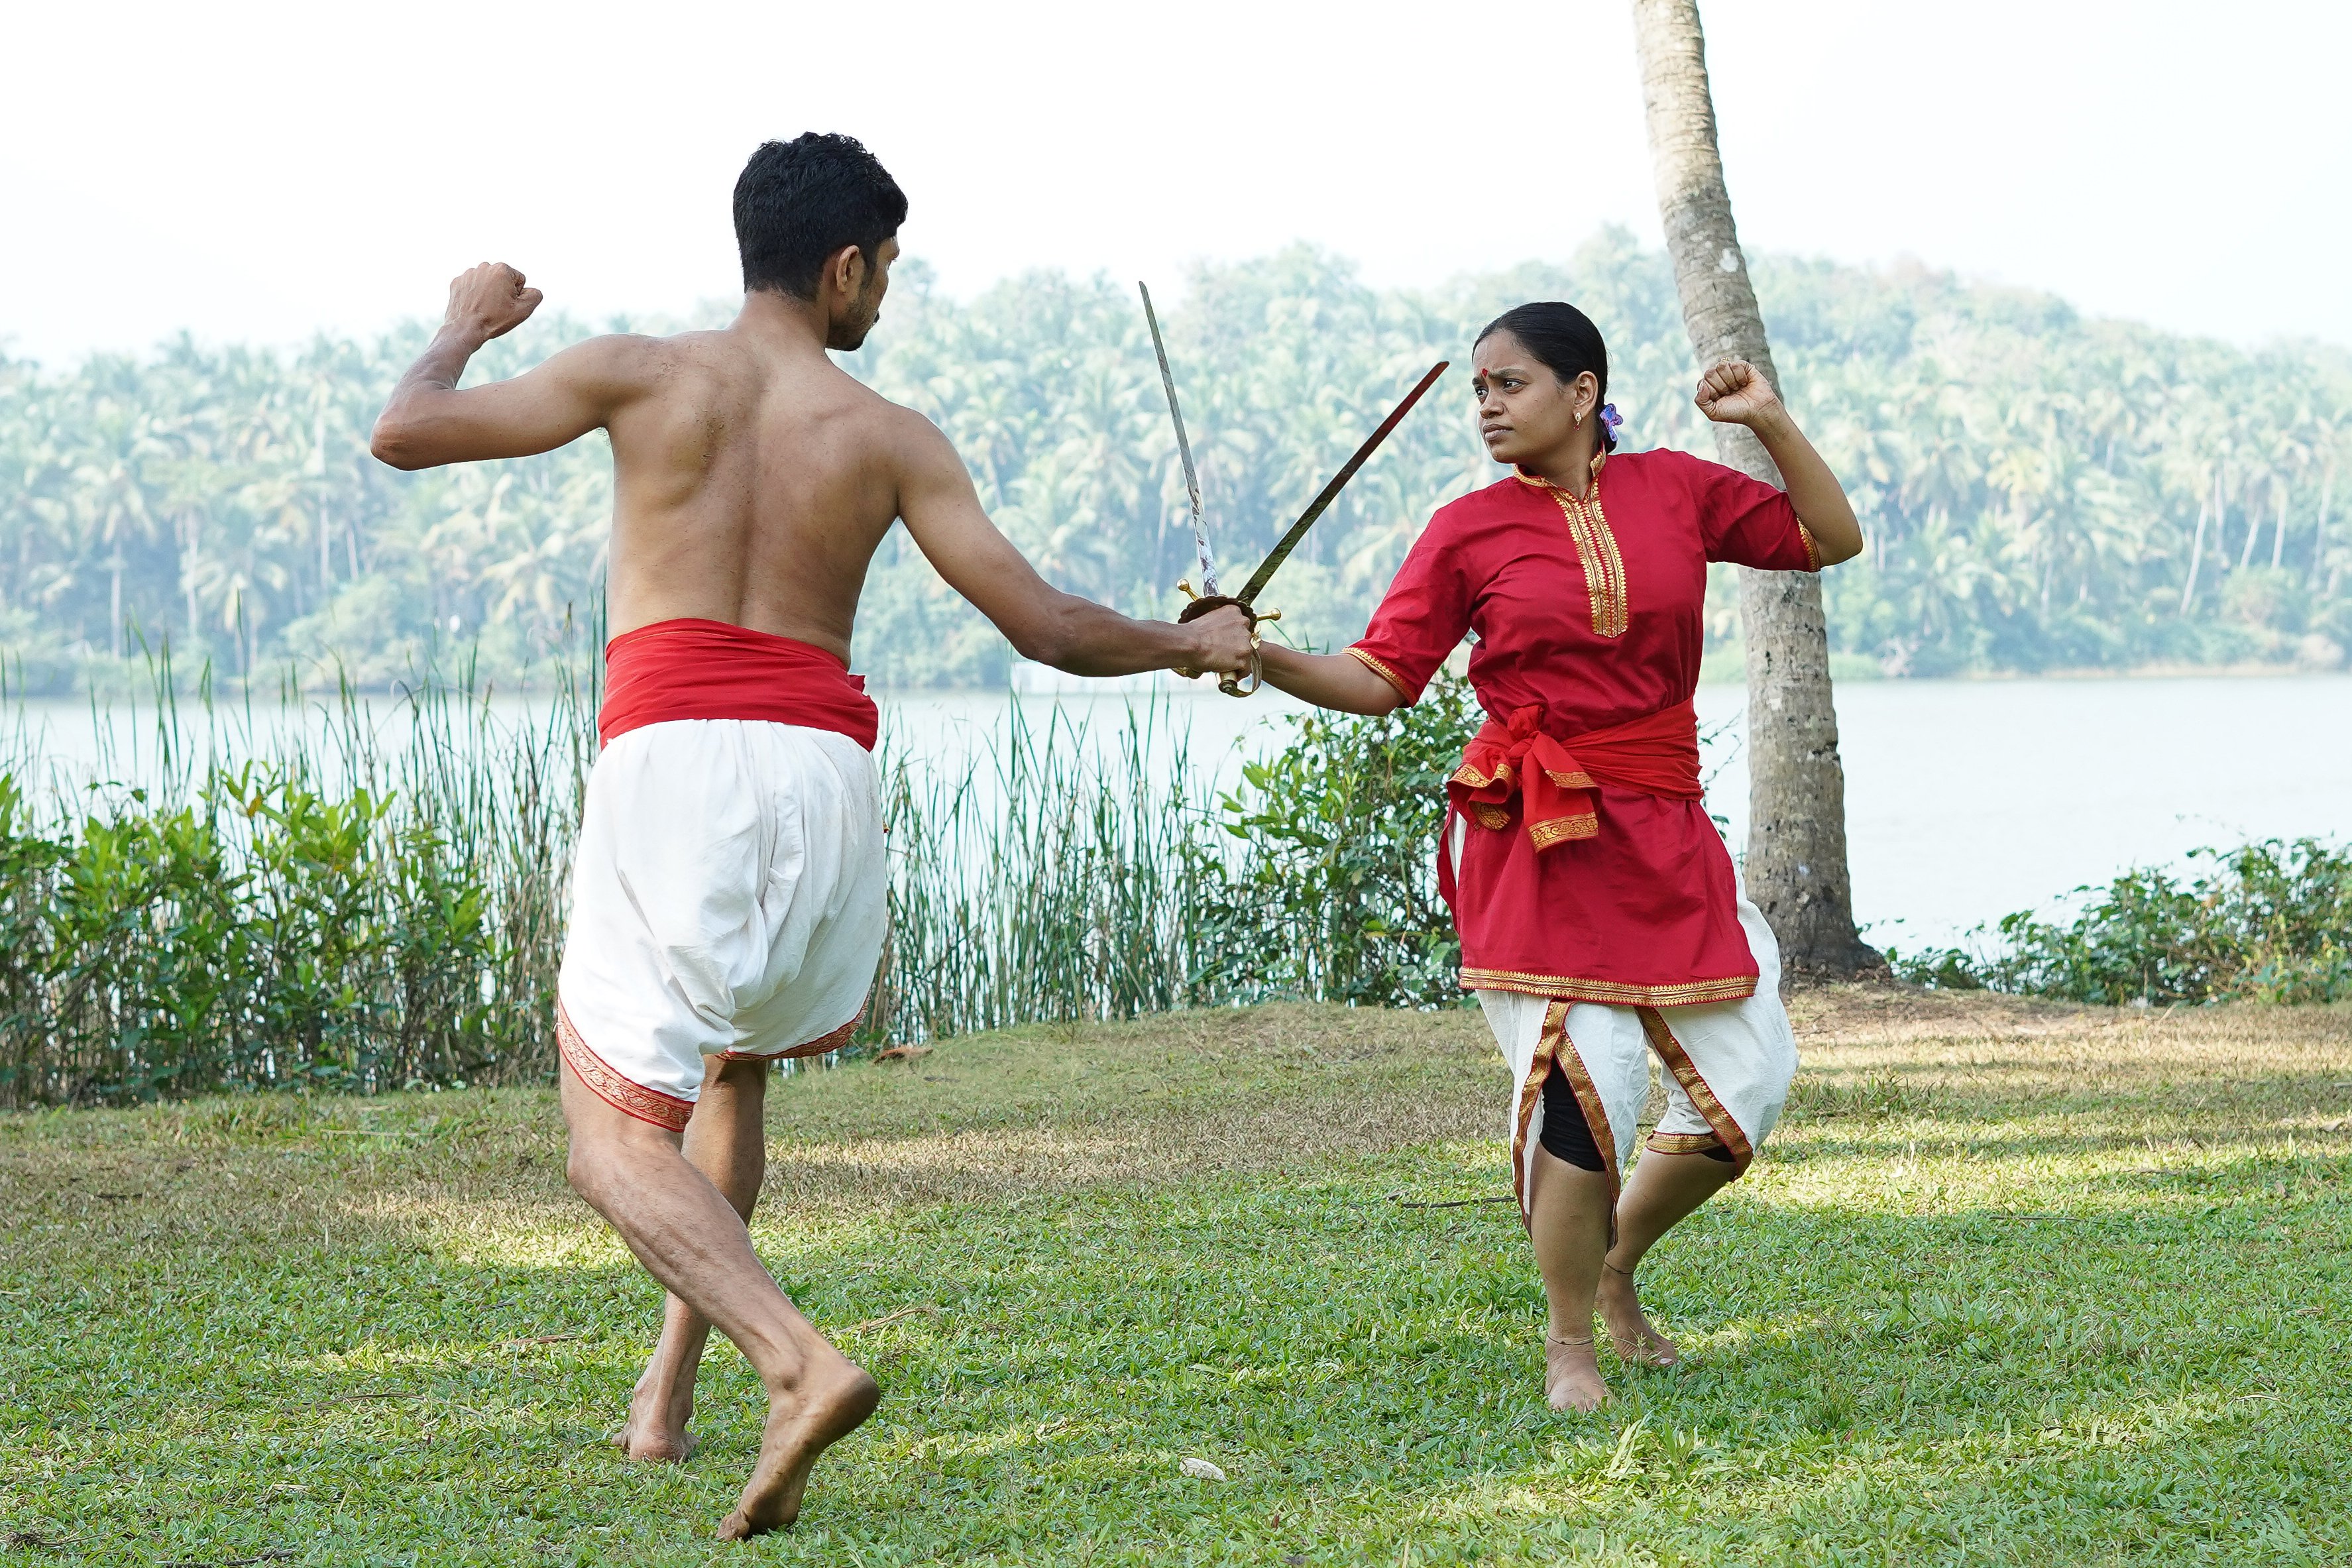 Vaal Payattu Or Sword Fight. Kalaripayattu. Martial Arts Of Kerala. Download High Resolution Image For Free